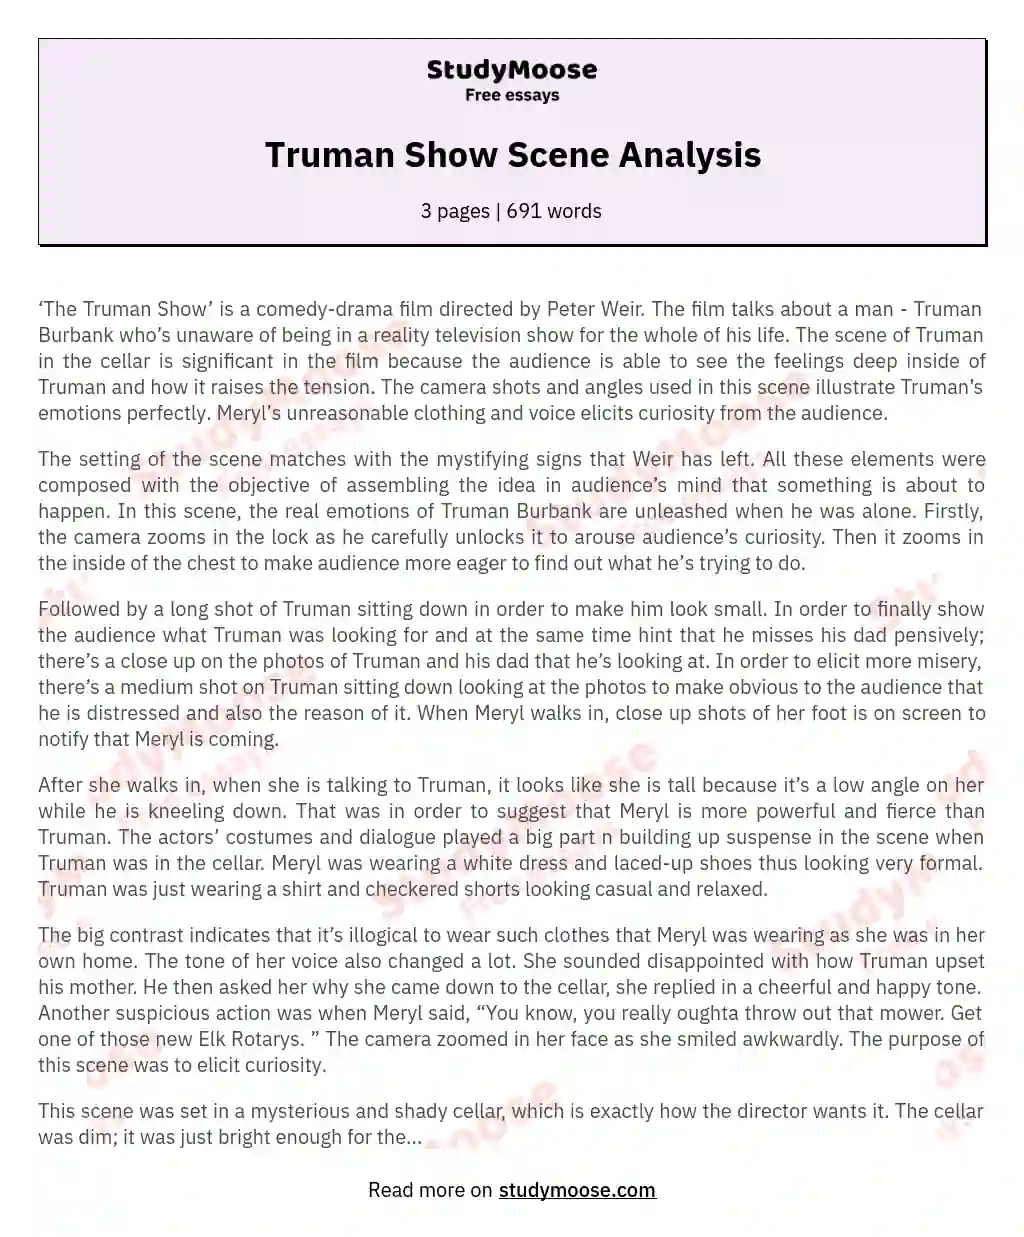 Truman Show Scene Analysis essay